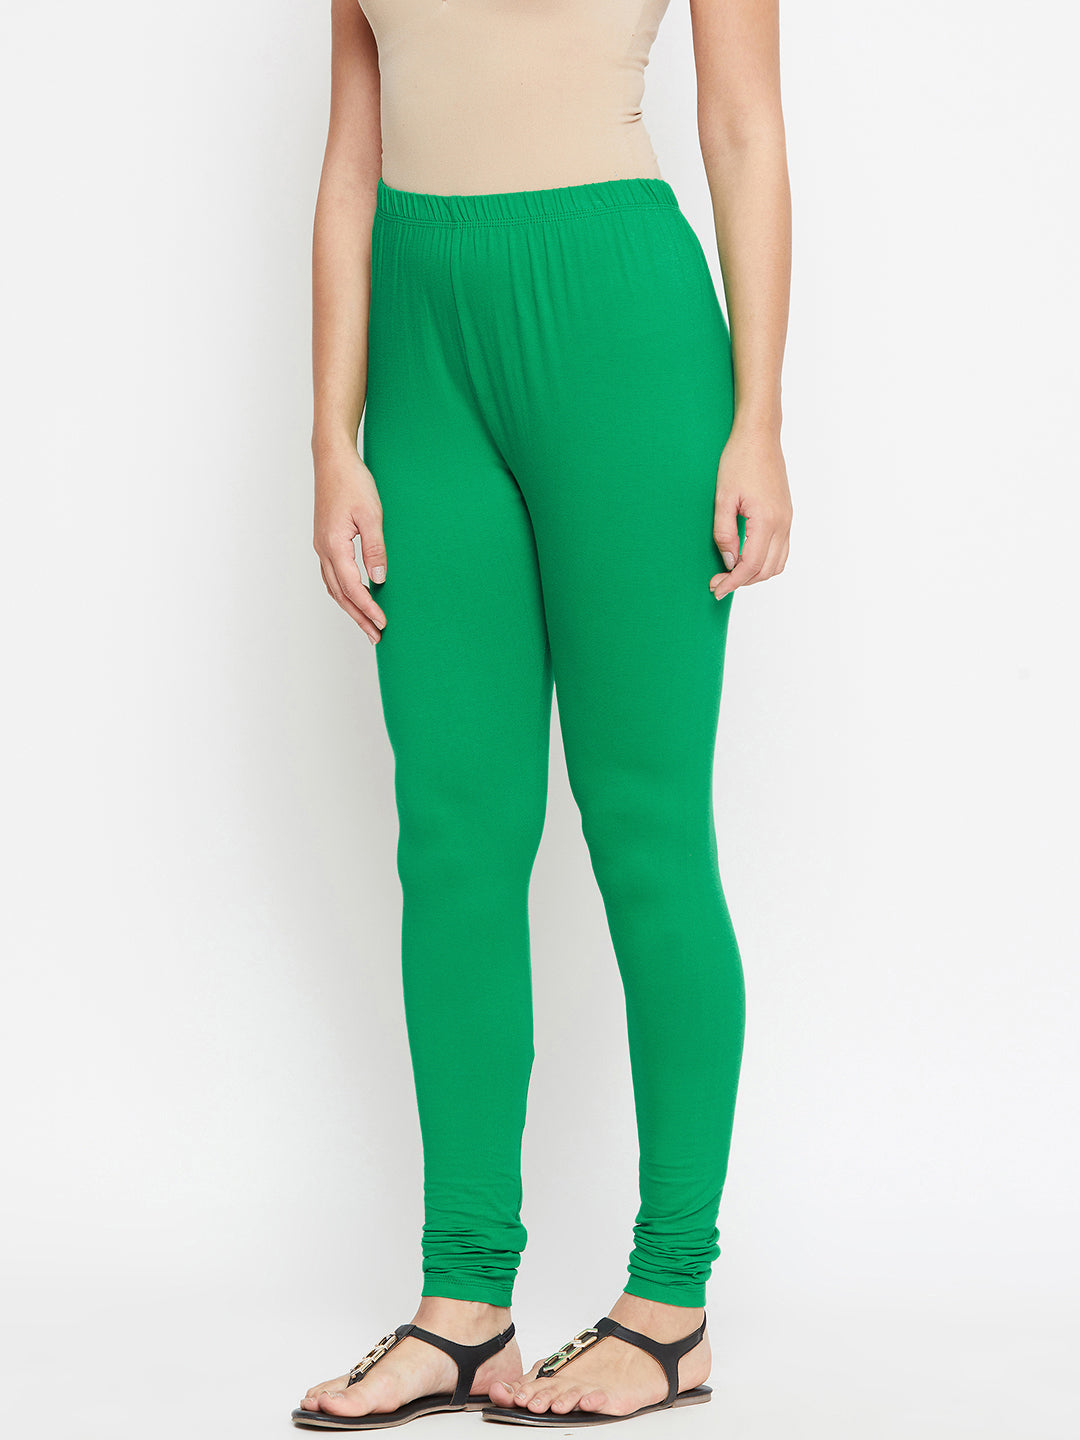 Buy Green Leggings for Women by AVAASA MIX N' MATCH Online